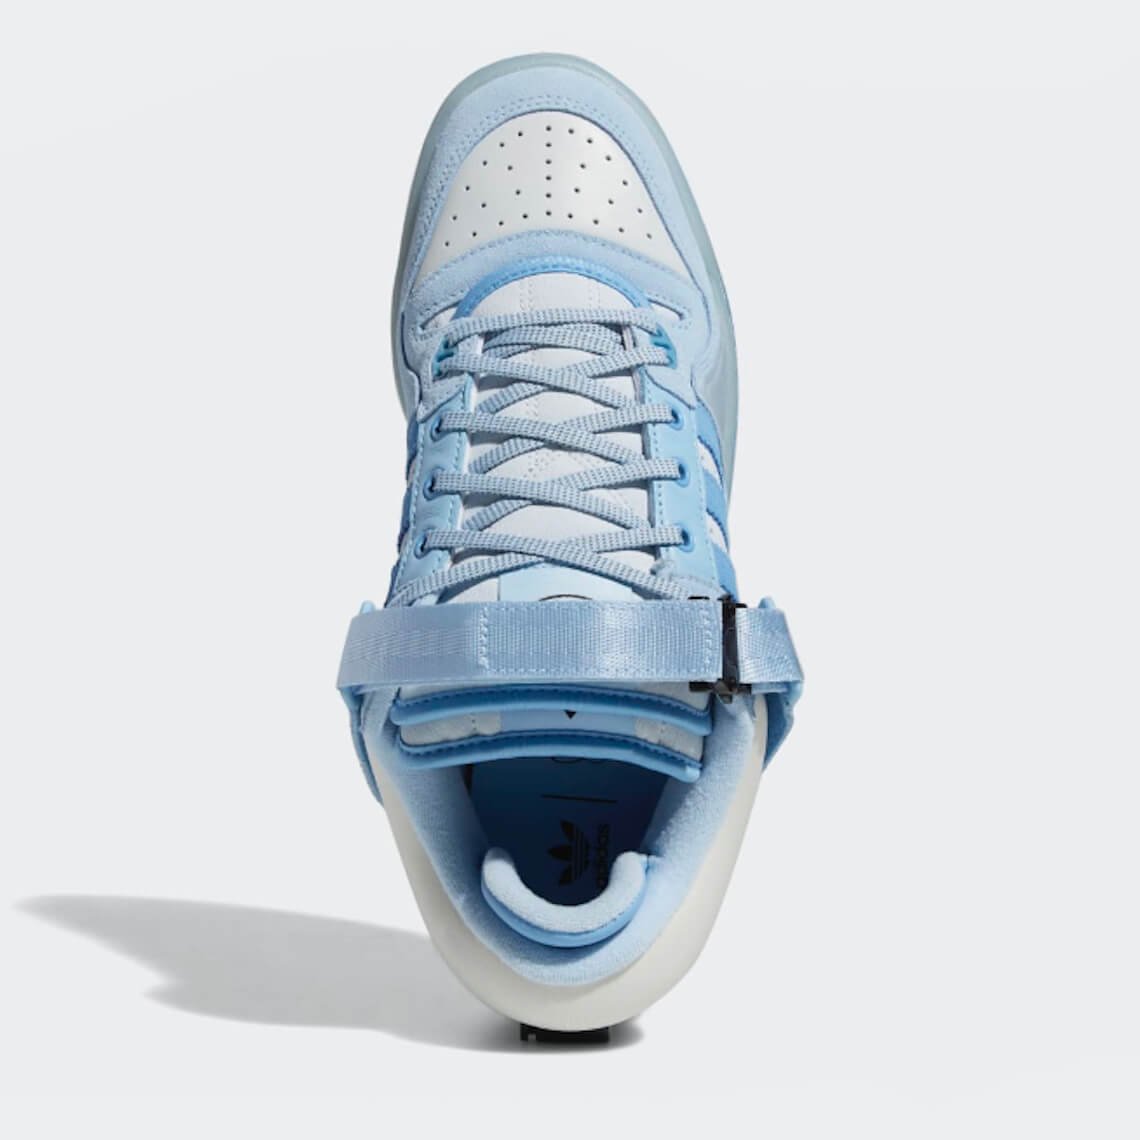 CNK-bad-bunny-adidas-forum-buckle-low-blue-tint-top.jpeg